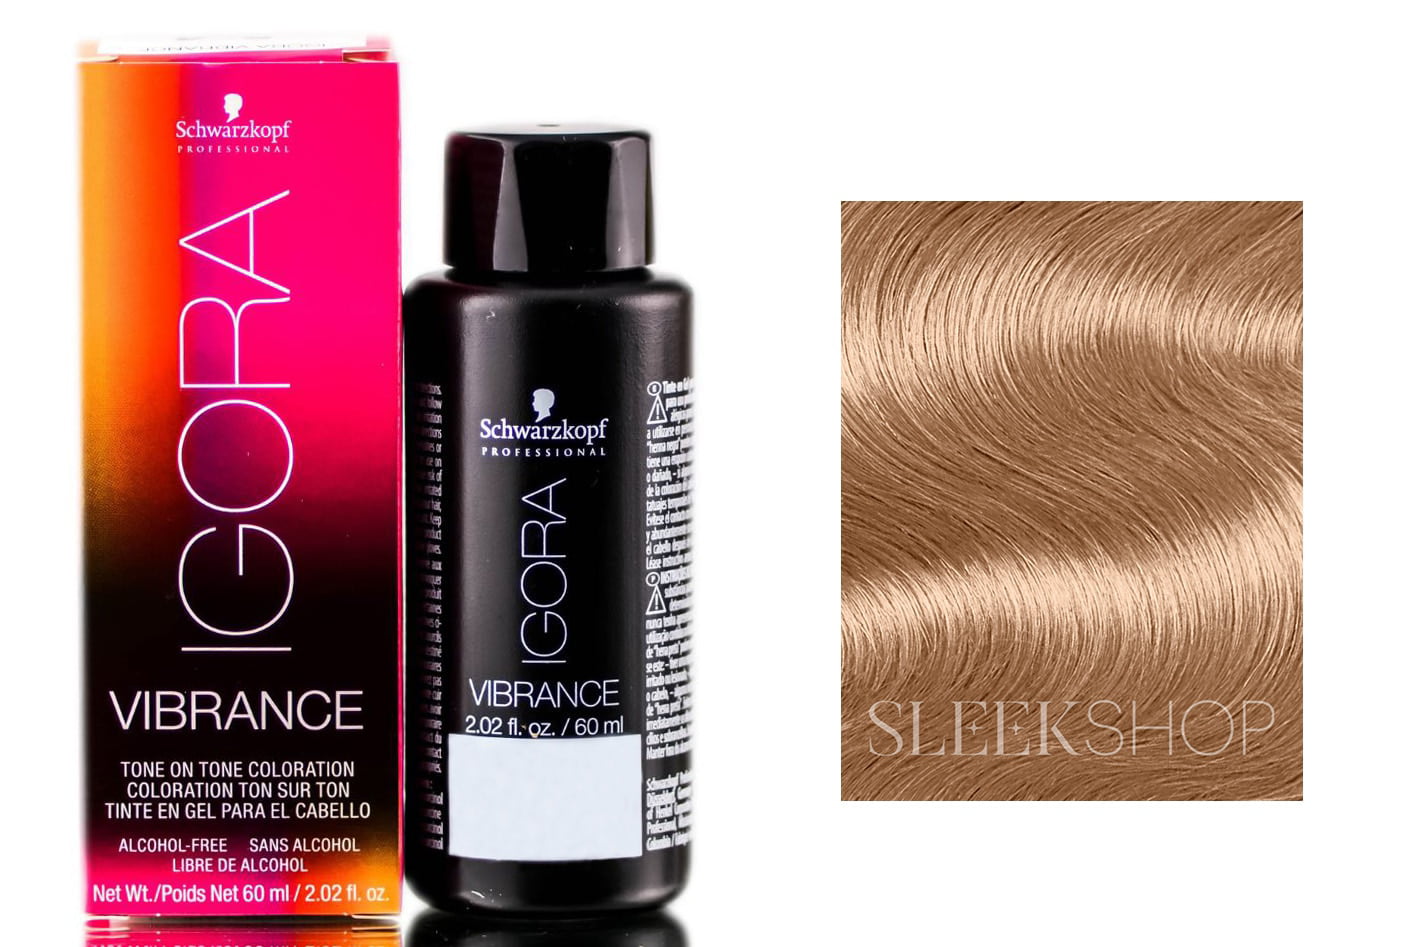 Schwarzkopf Igora Vibrance Demi-Permanent Tone on Tone Coloration Hair Color - 9-65 Walmart.com